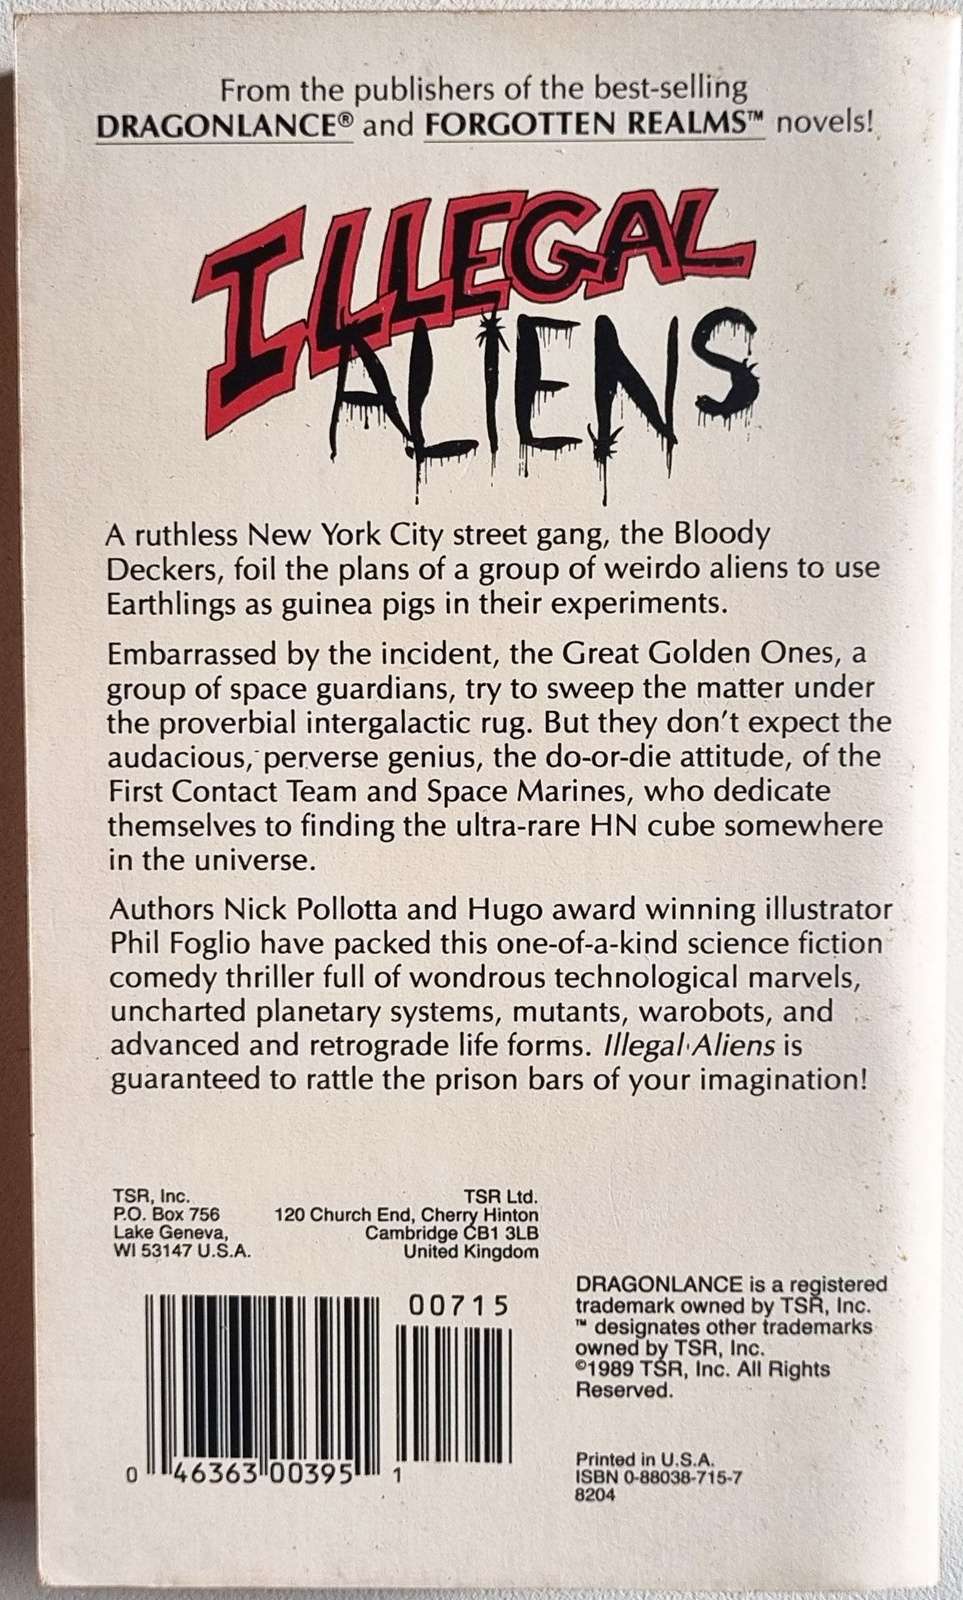 Illegal Aliens - Nick Pollotta & Phil Foglio